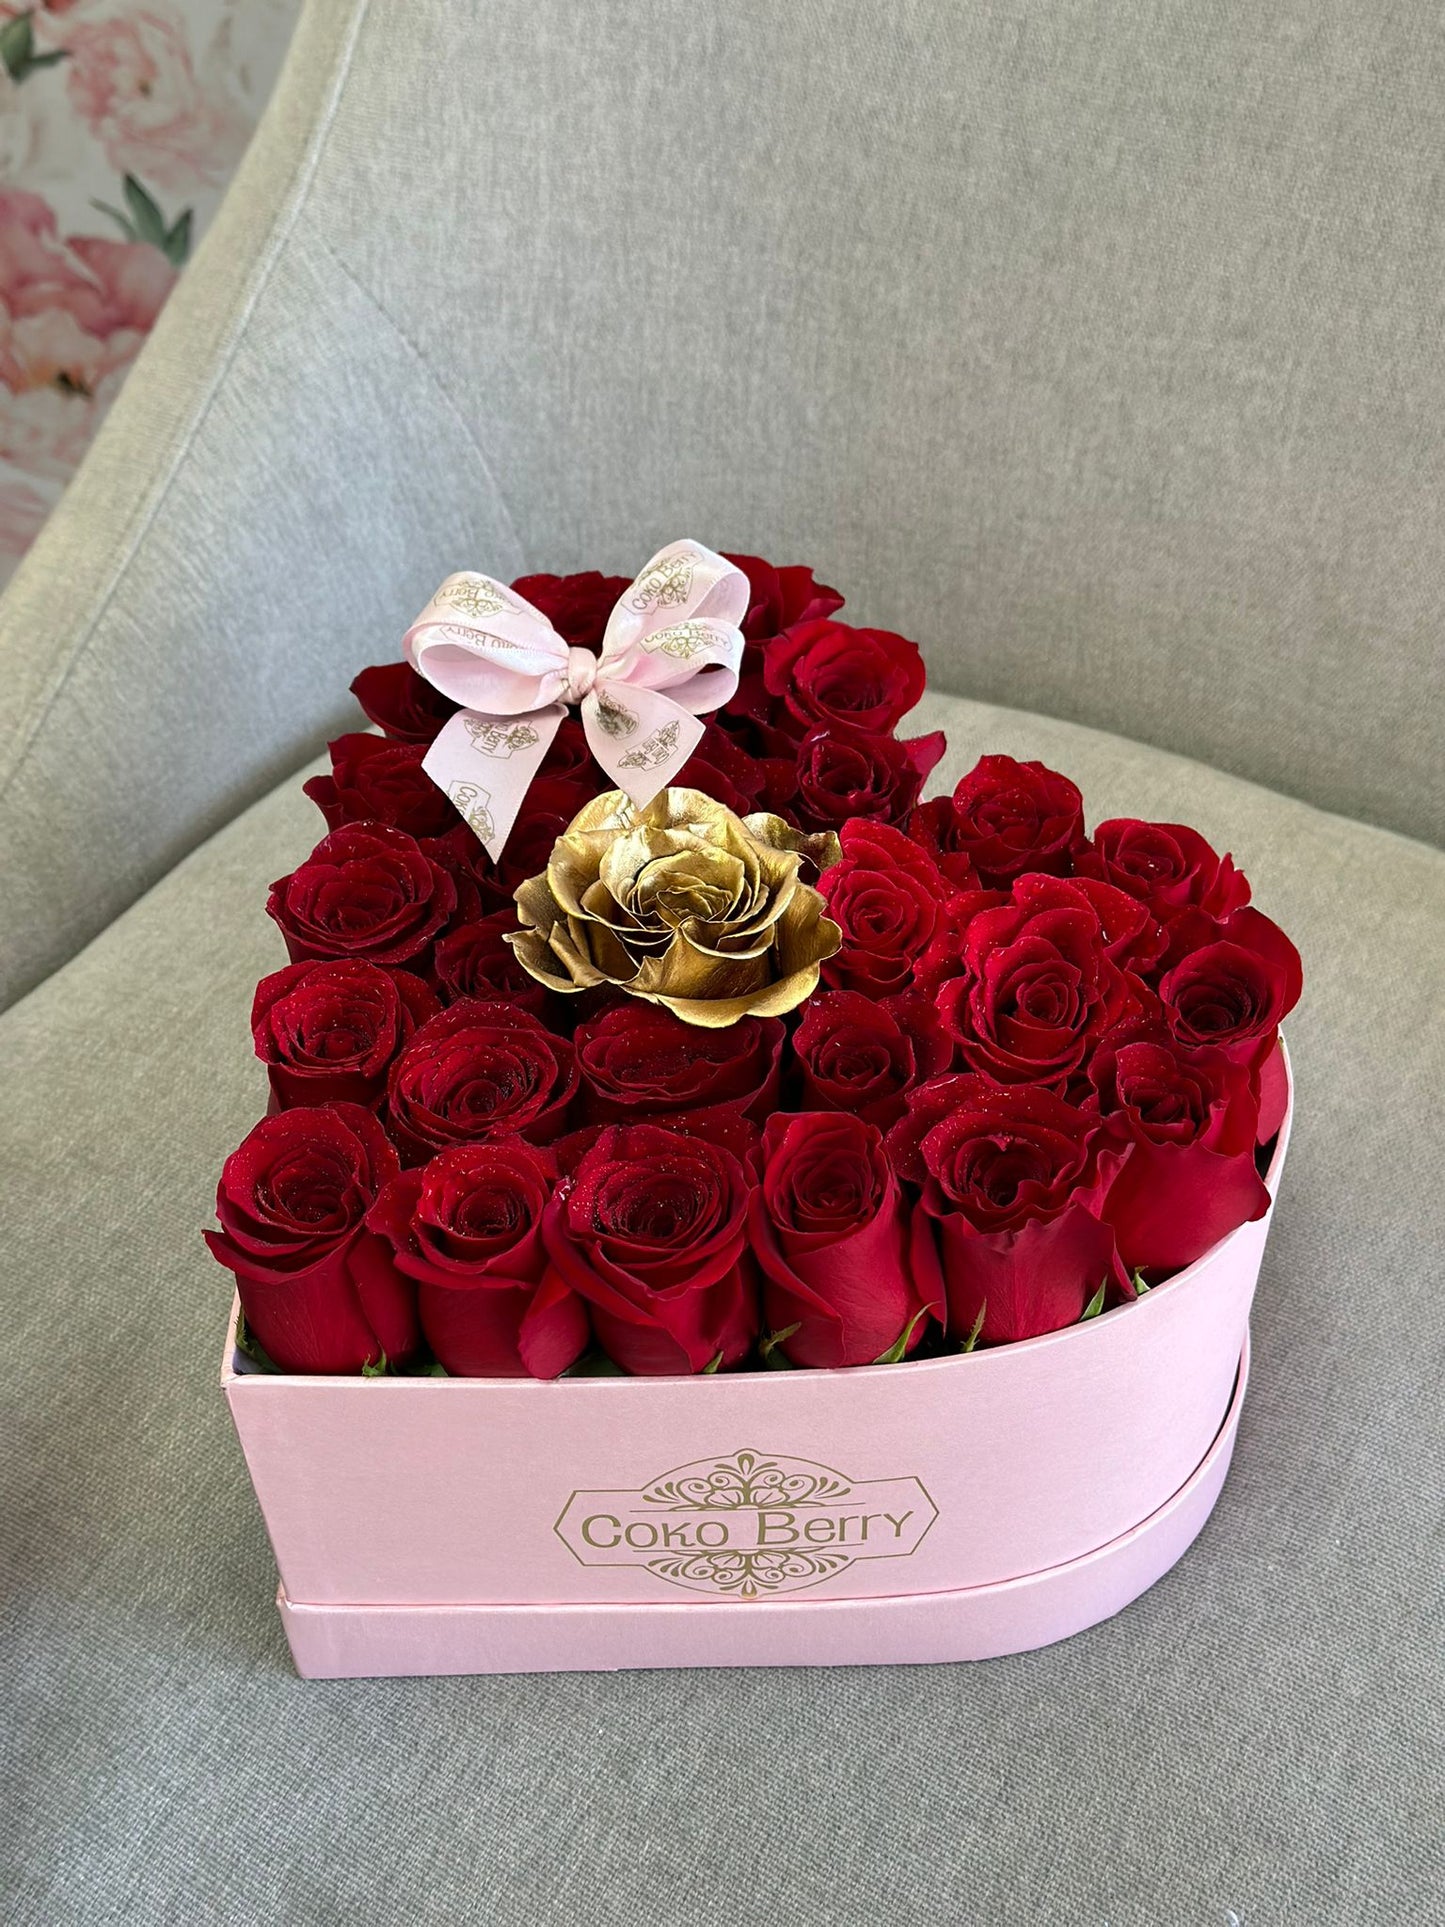 I Love You Roses Heart